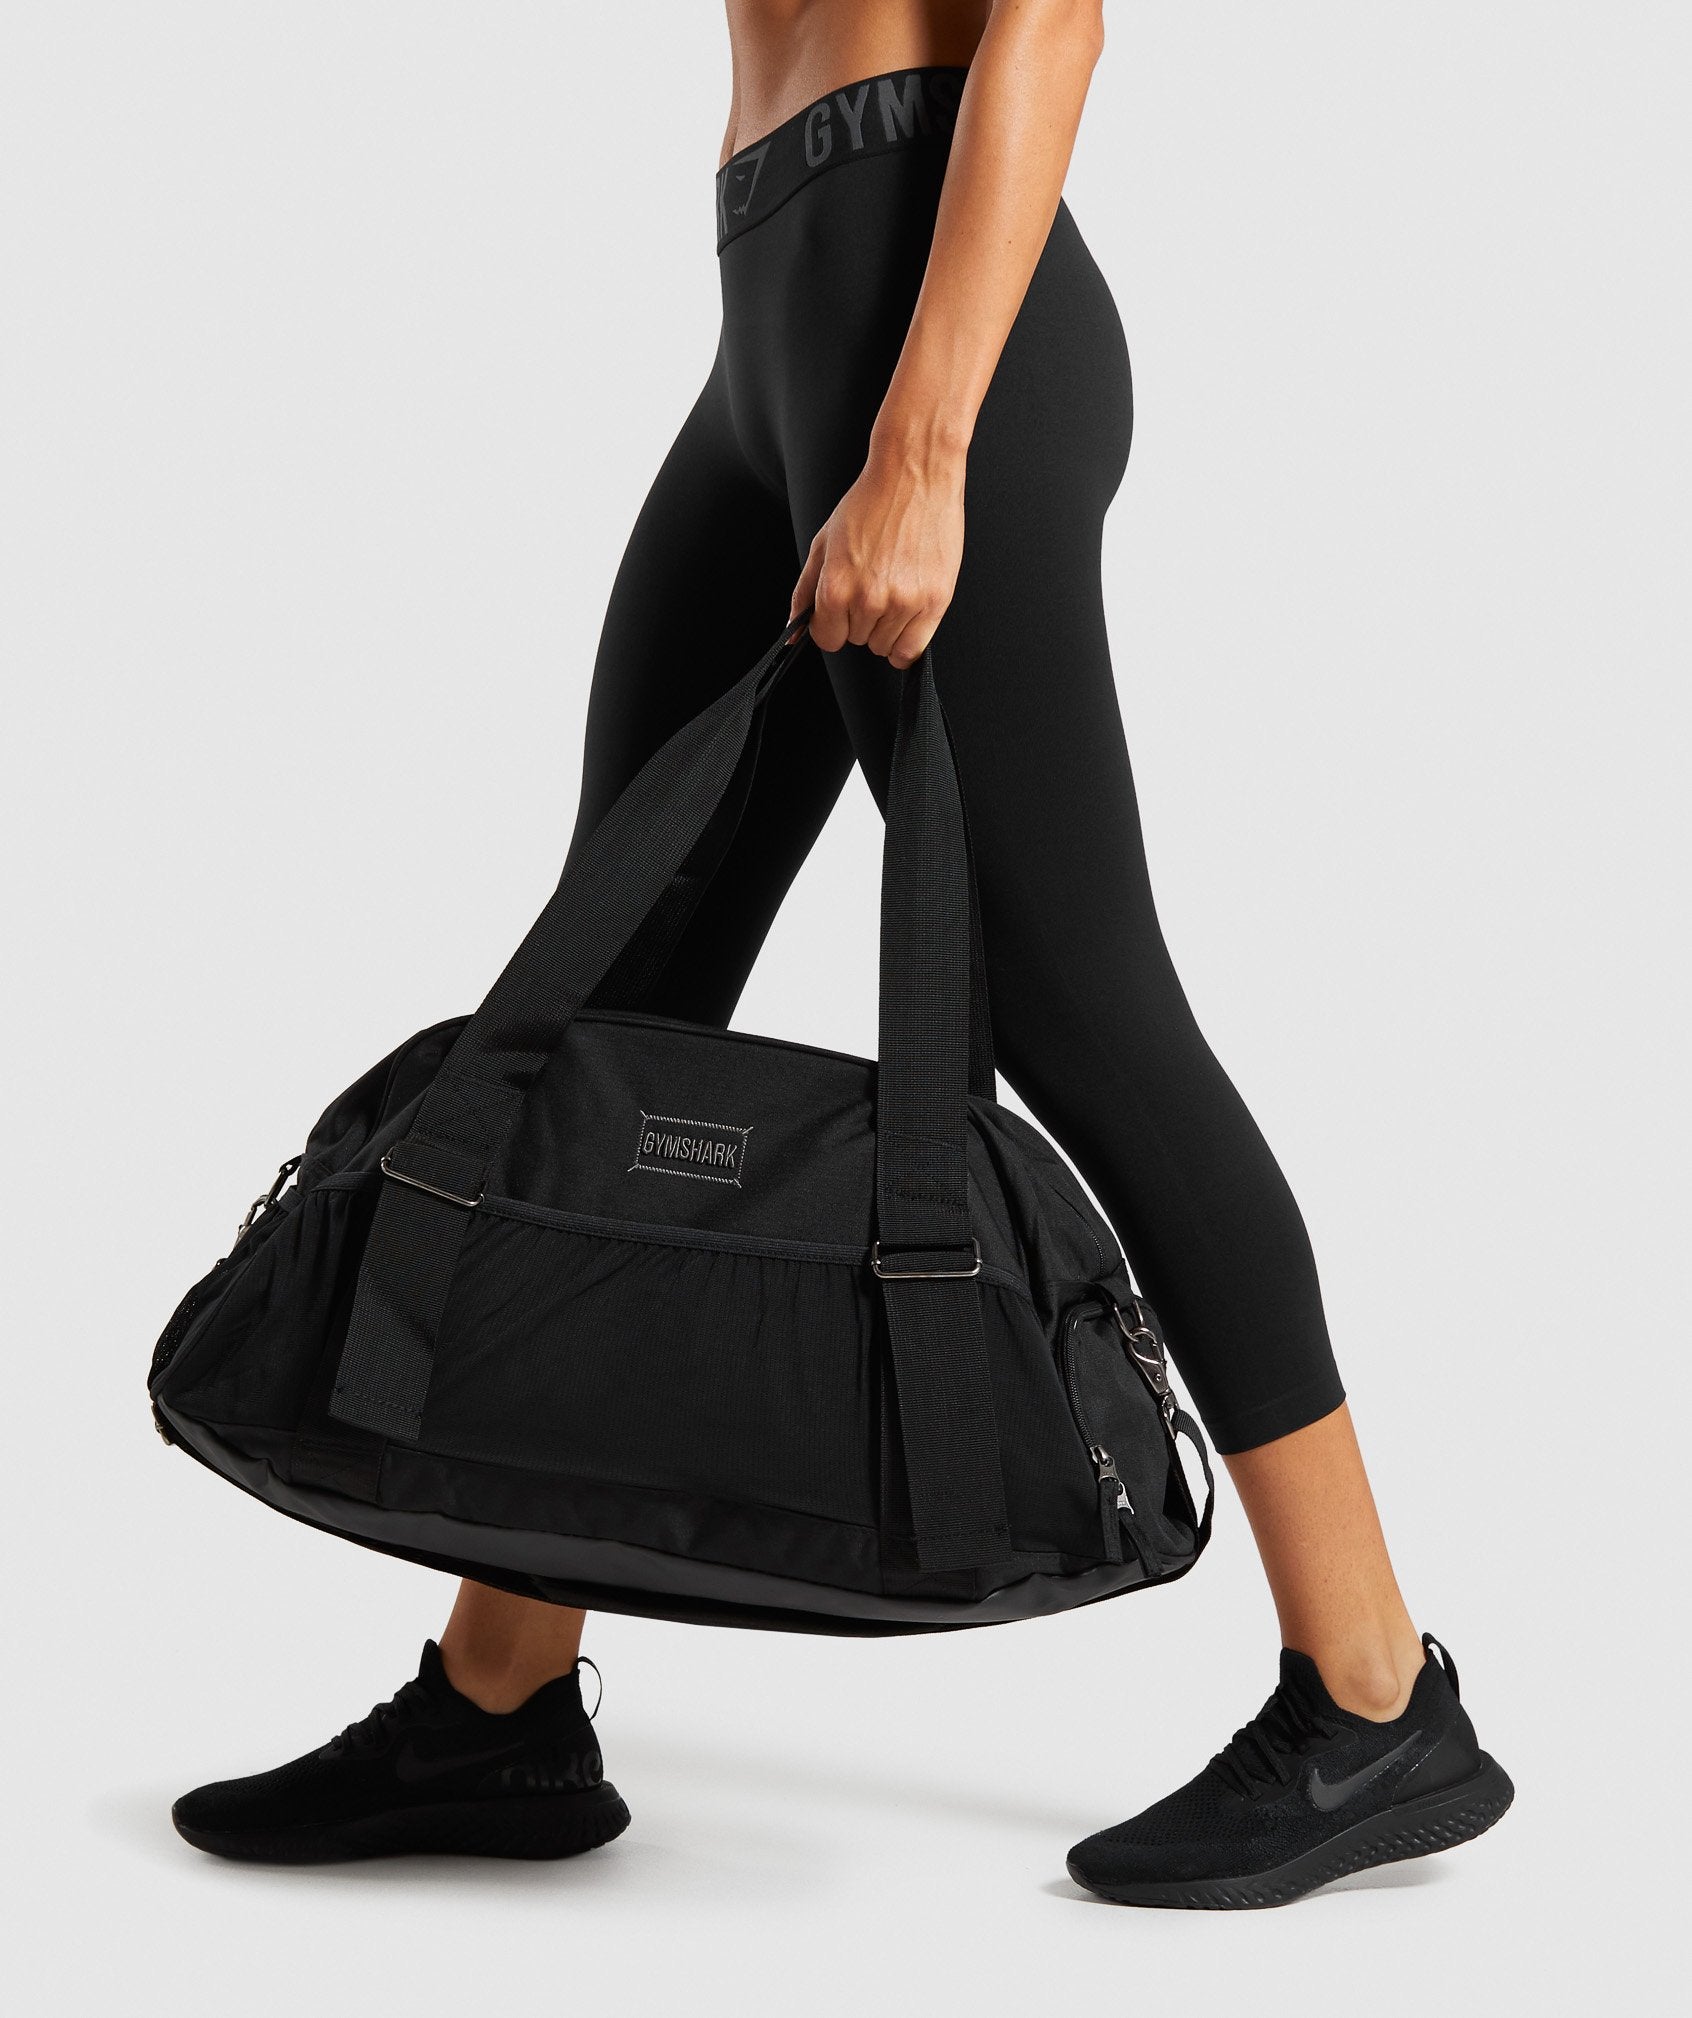 Lifestyle Gym Bag in Black